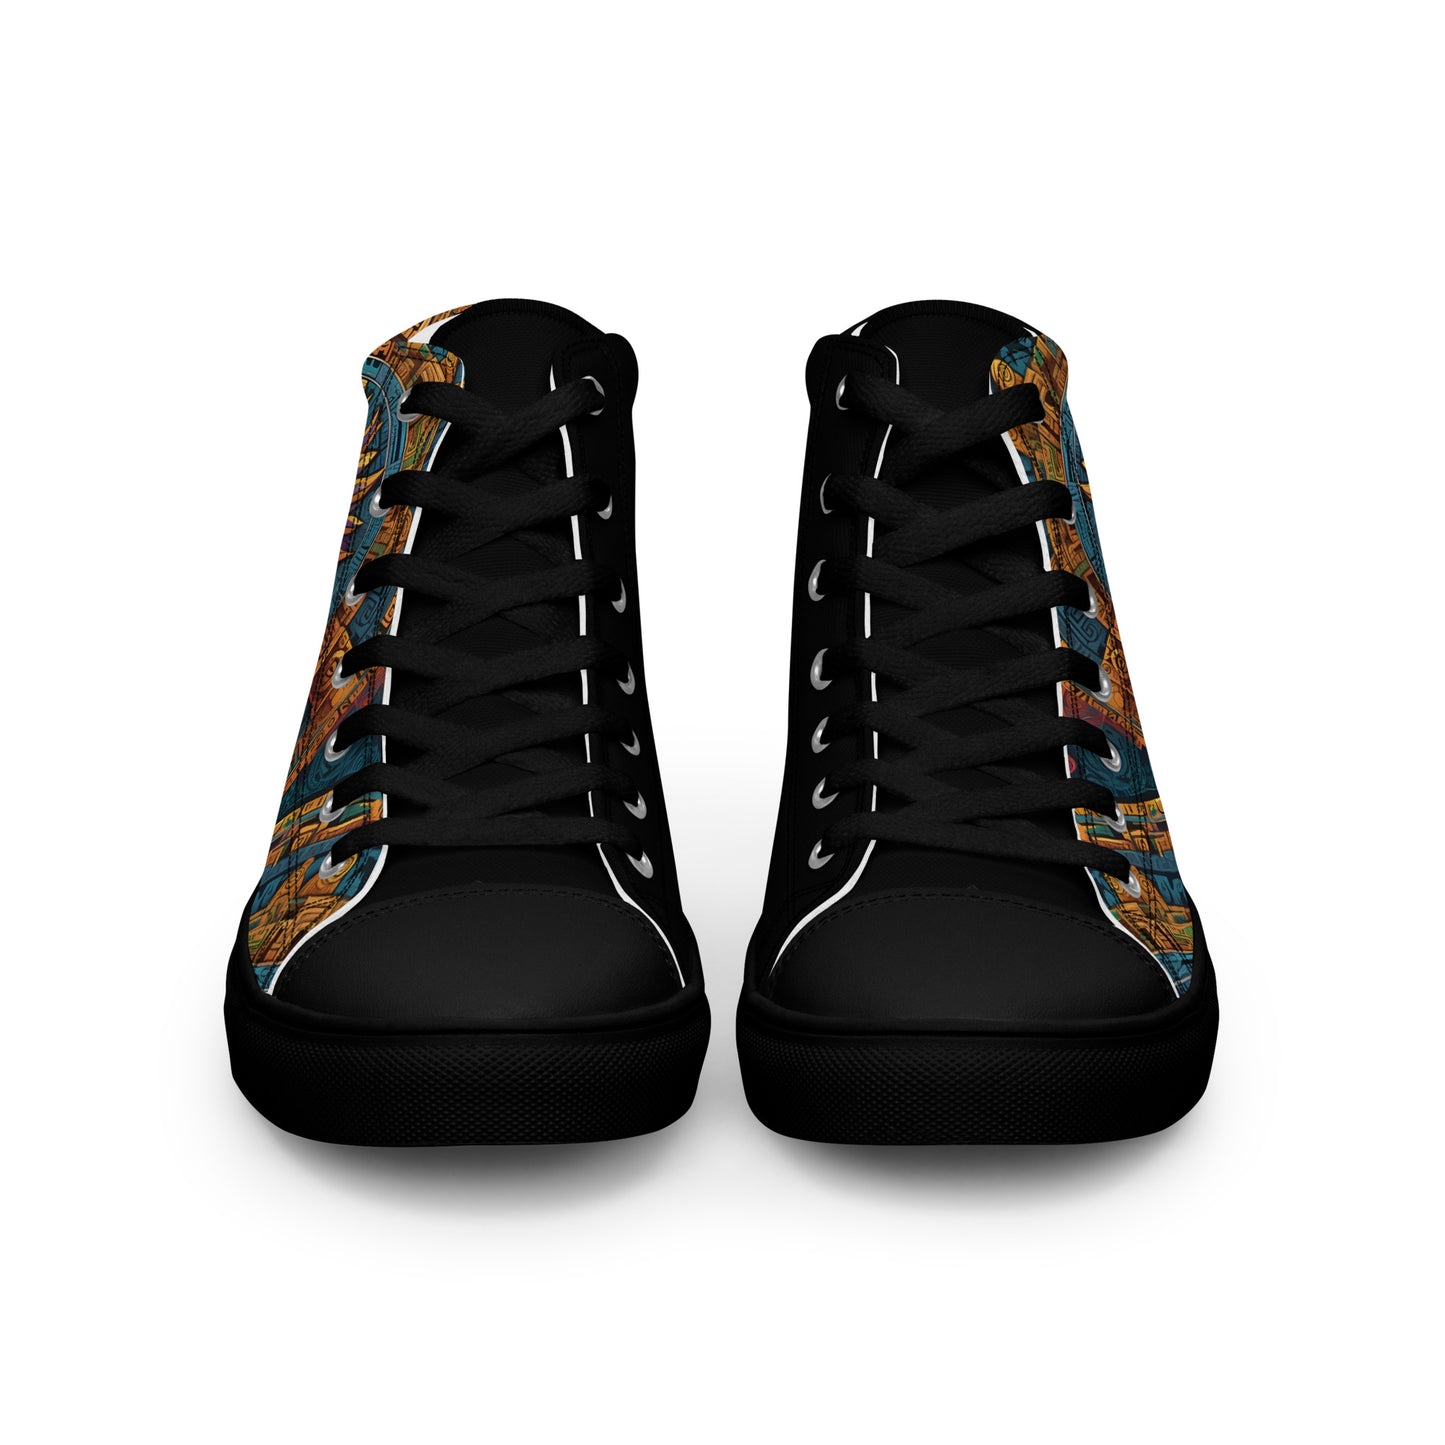 Calendario Qoyllor - Men - Black - High top shoes